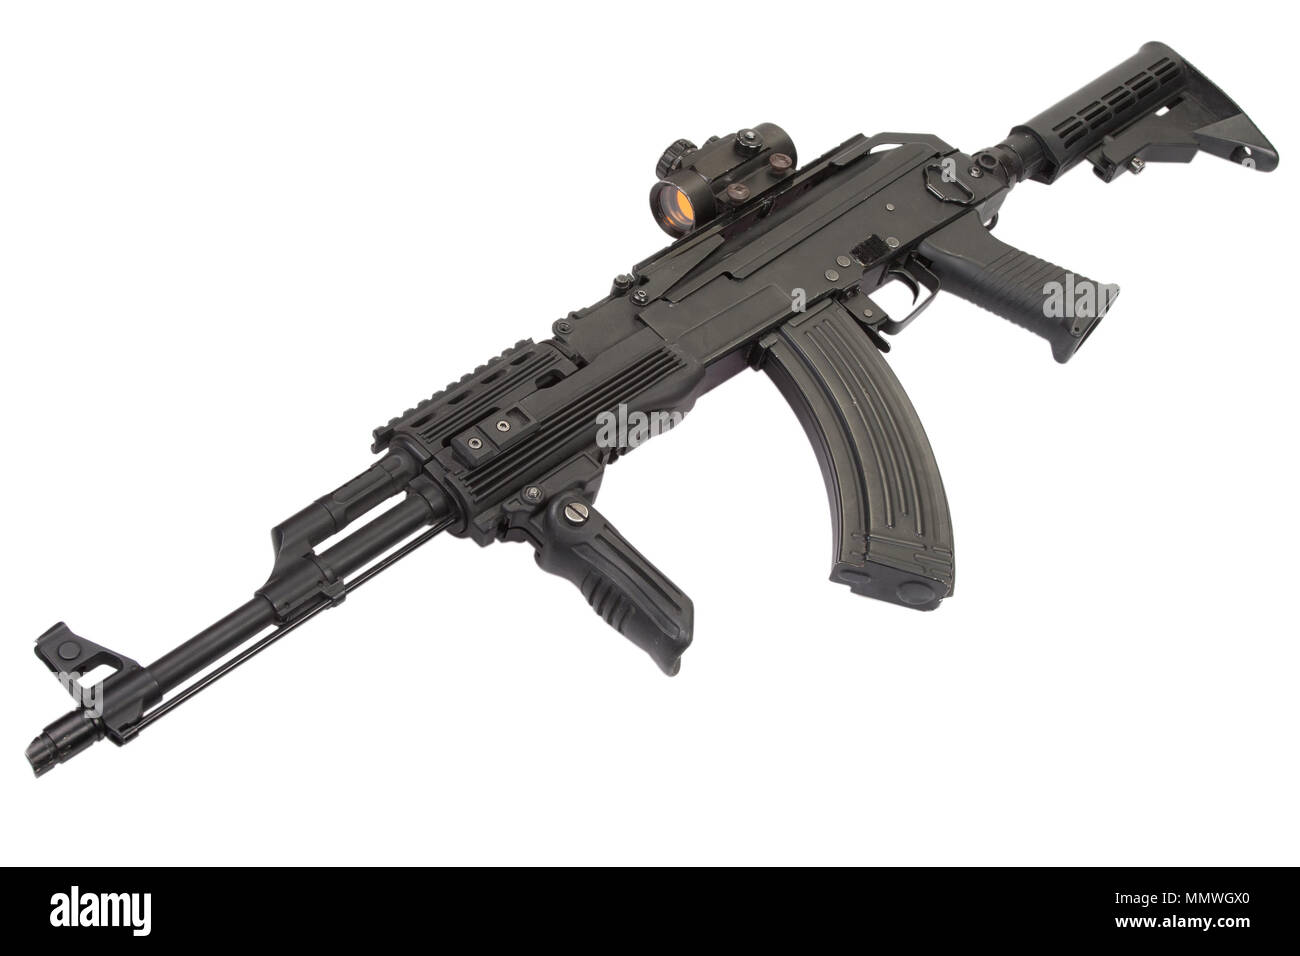 Kalashnikov AK47 with modern accessories Stock Photo - Alamy